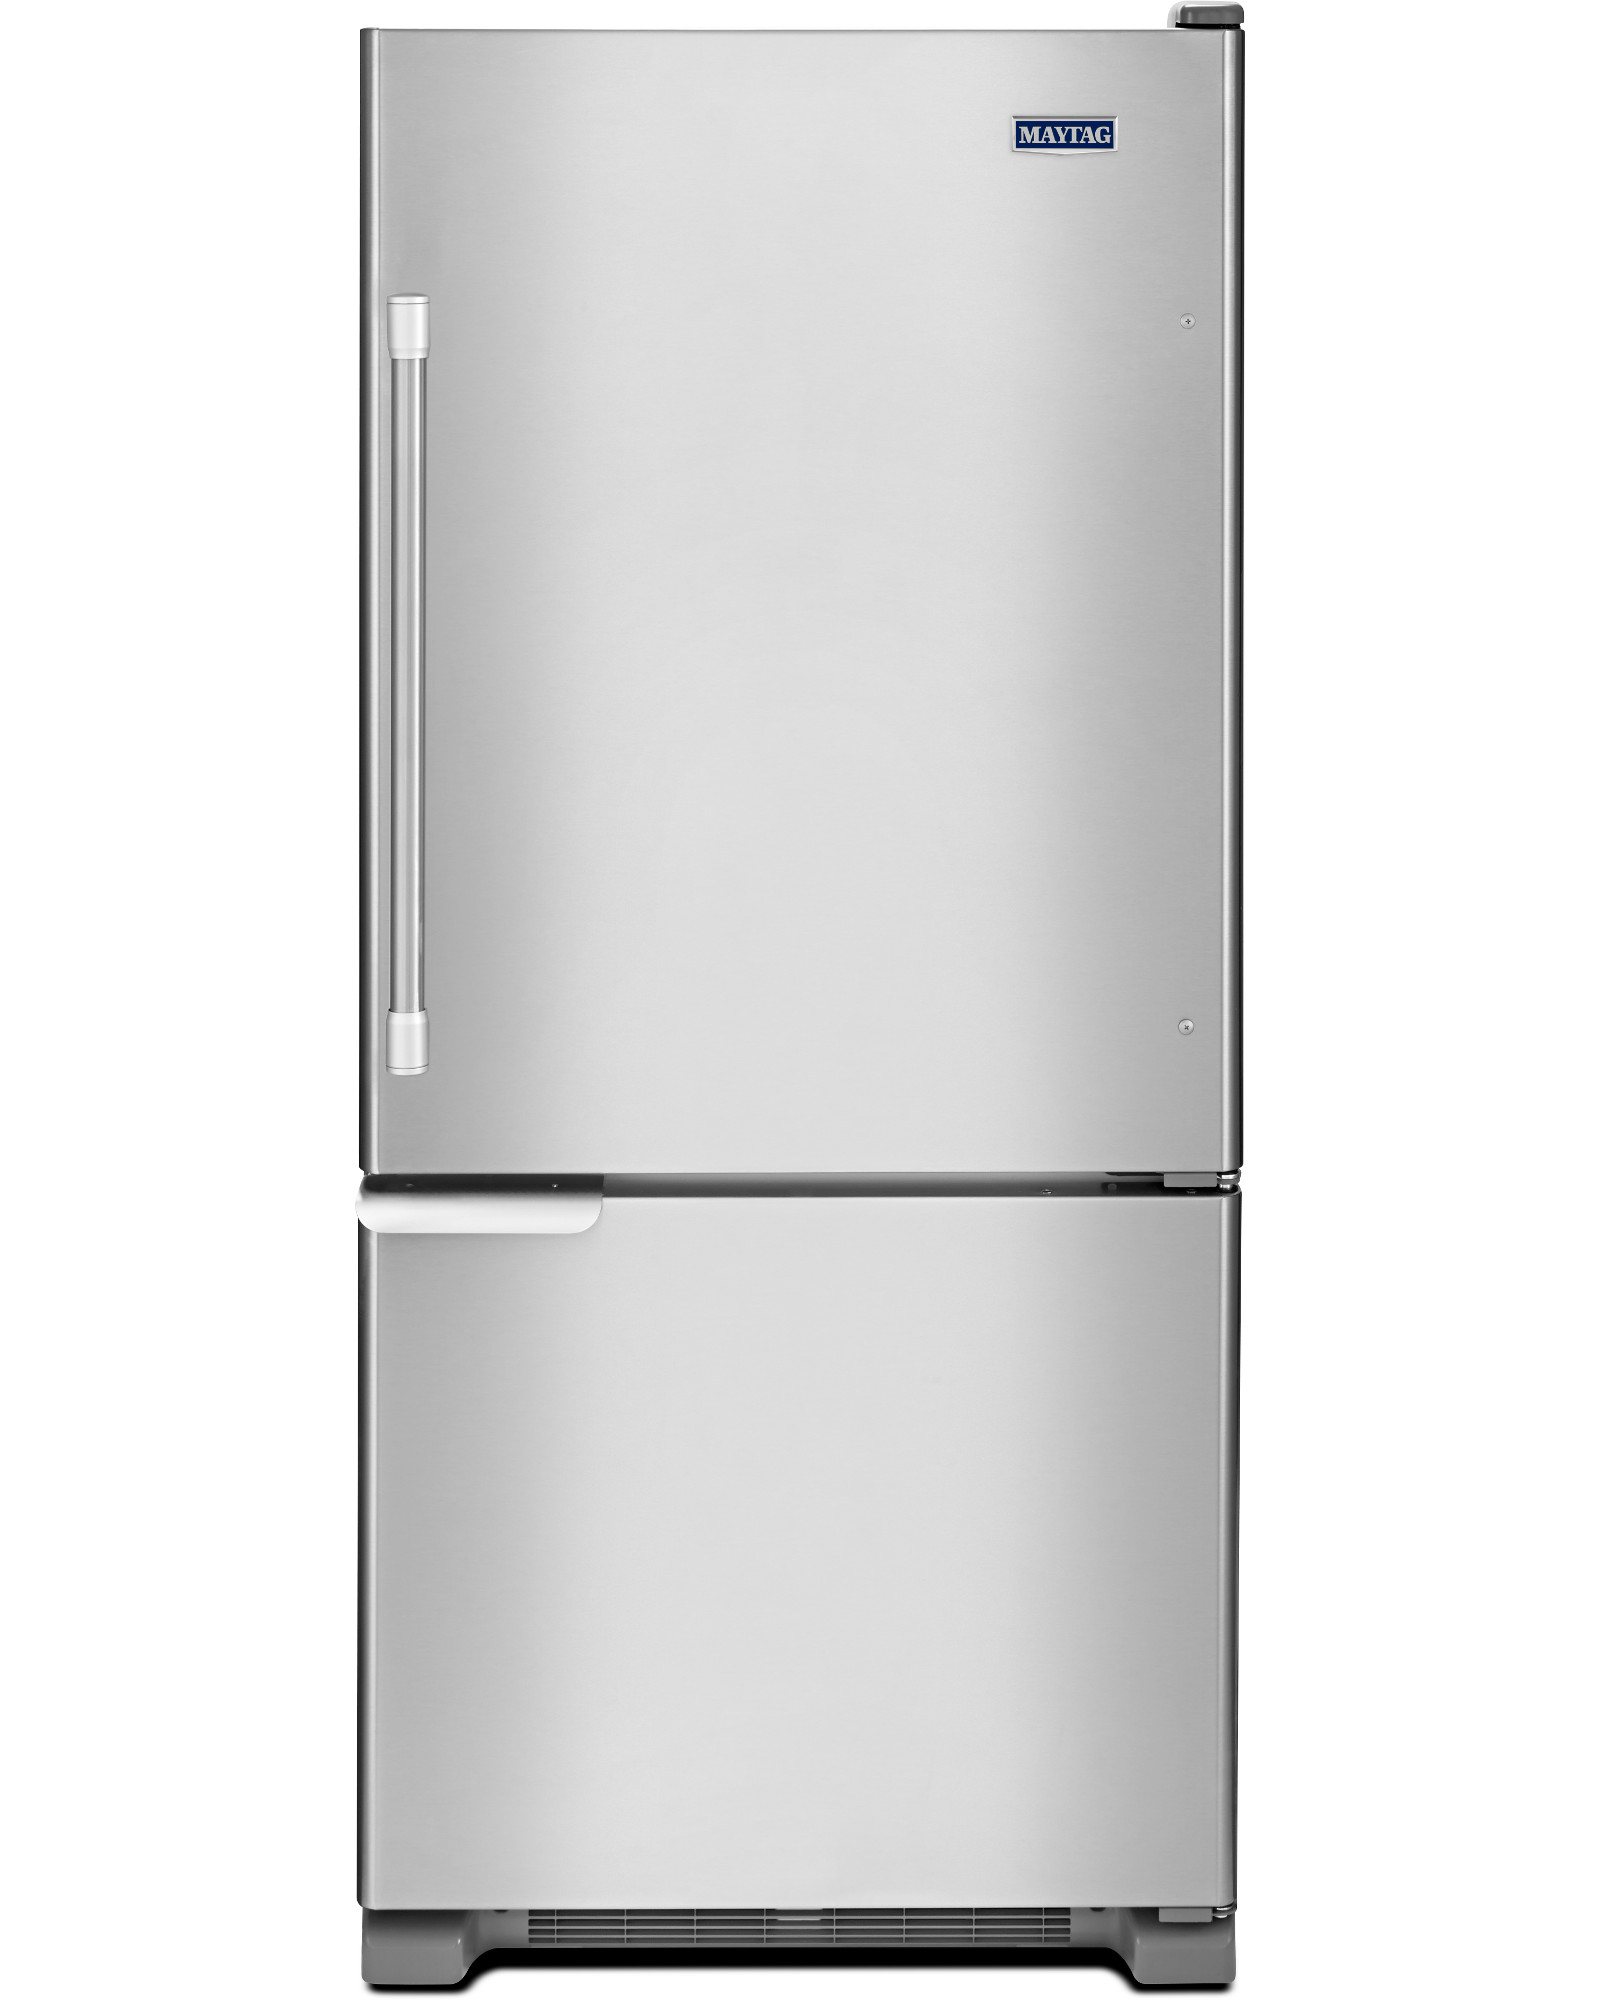 Maytag MBF1953DEM 19 cu. ft. Single Door Bottom Freezer Refrigerator Stainless Steel